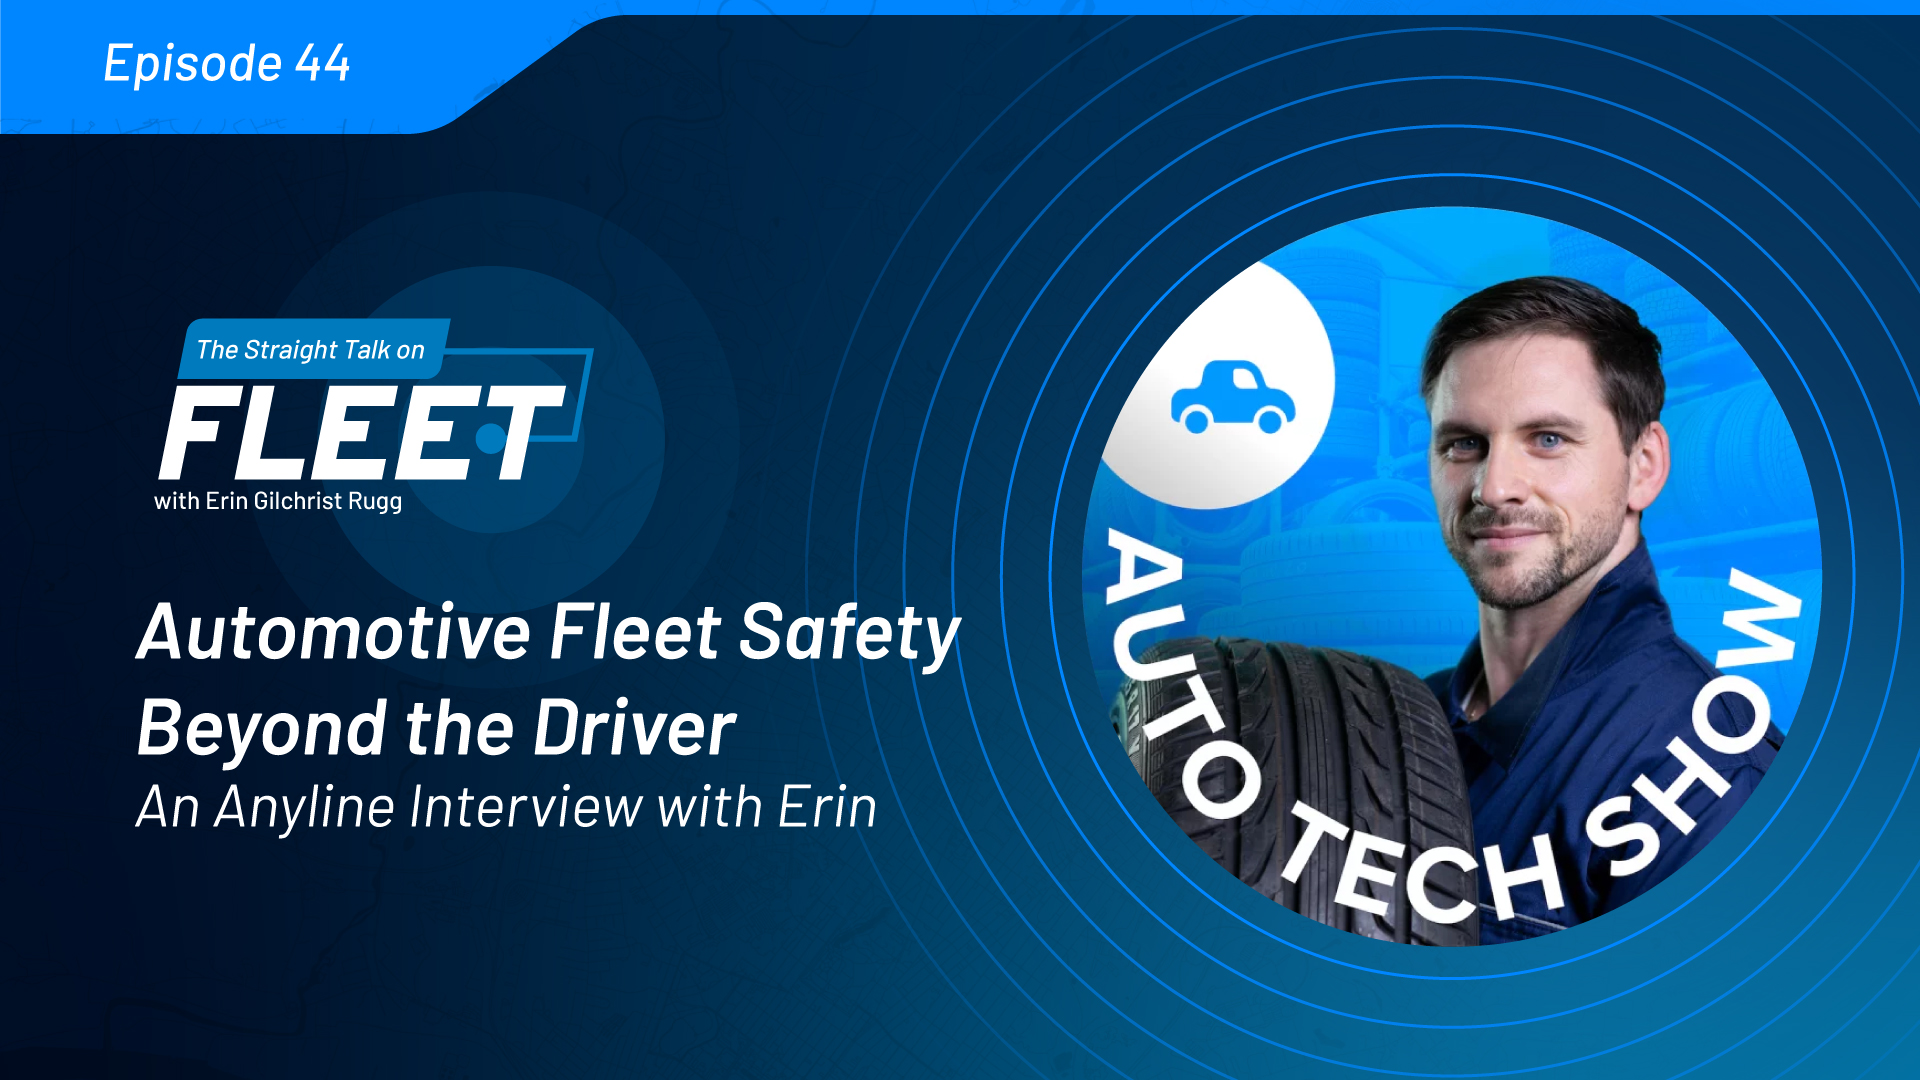 Straight Talk on Fleet Podcast: Automotive Fleet Safety Beyond the Driver